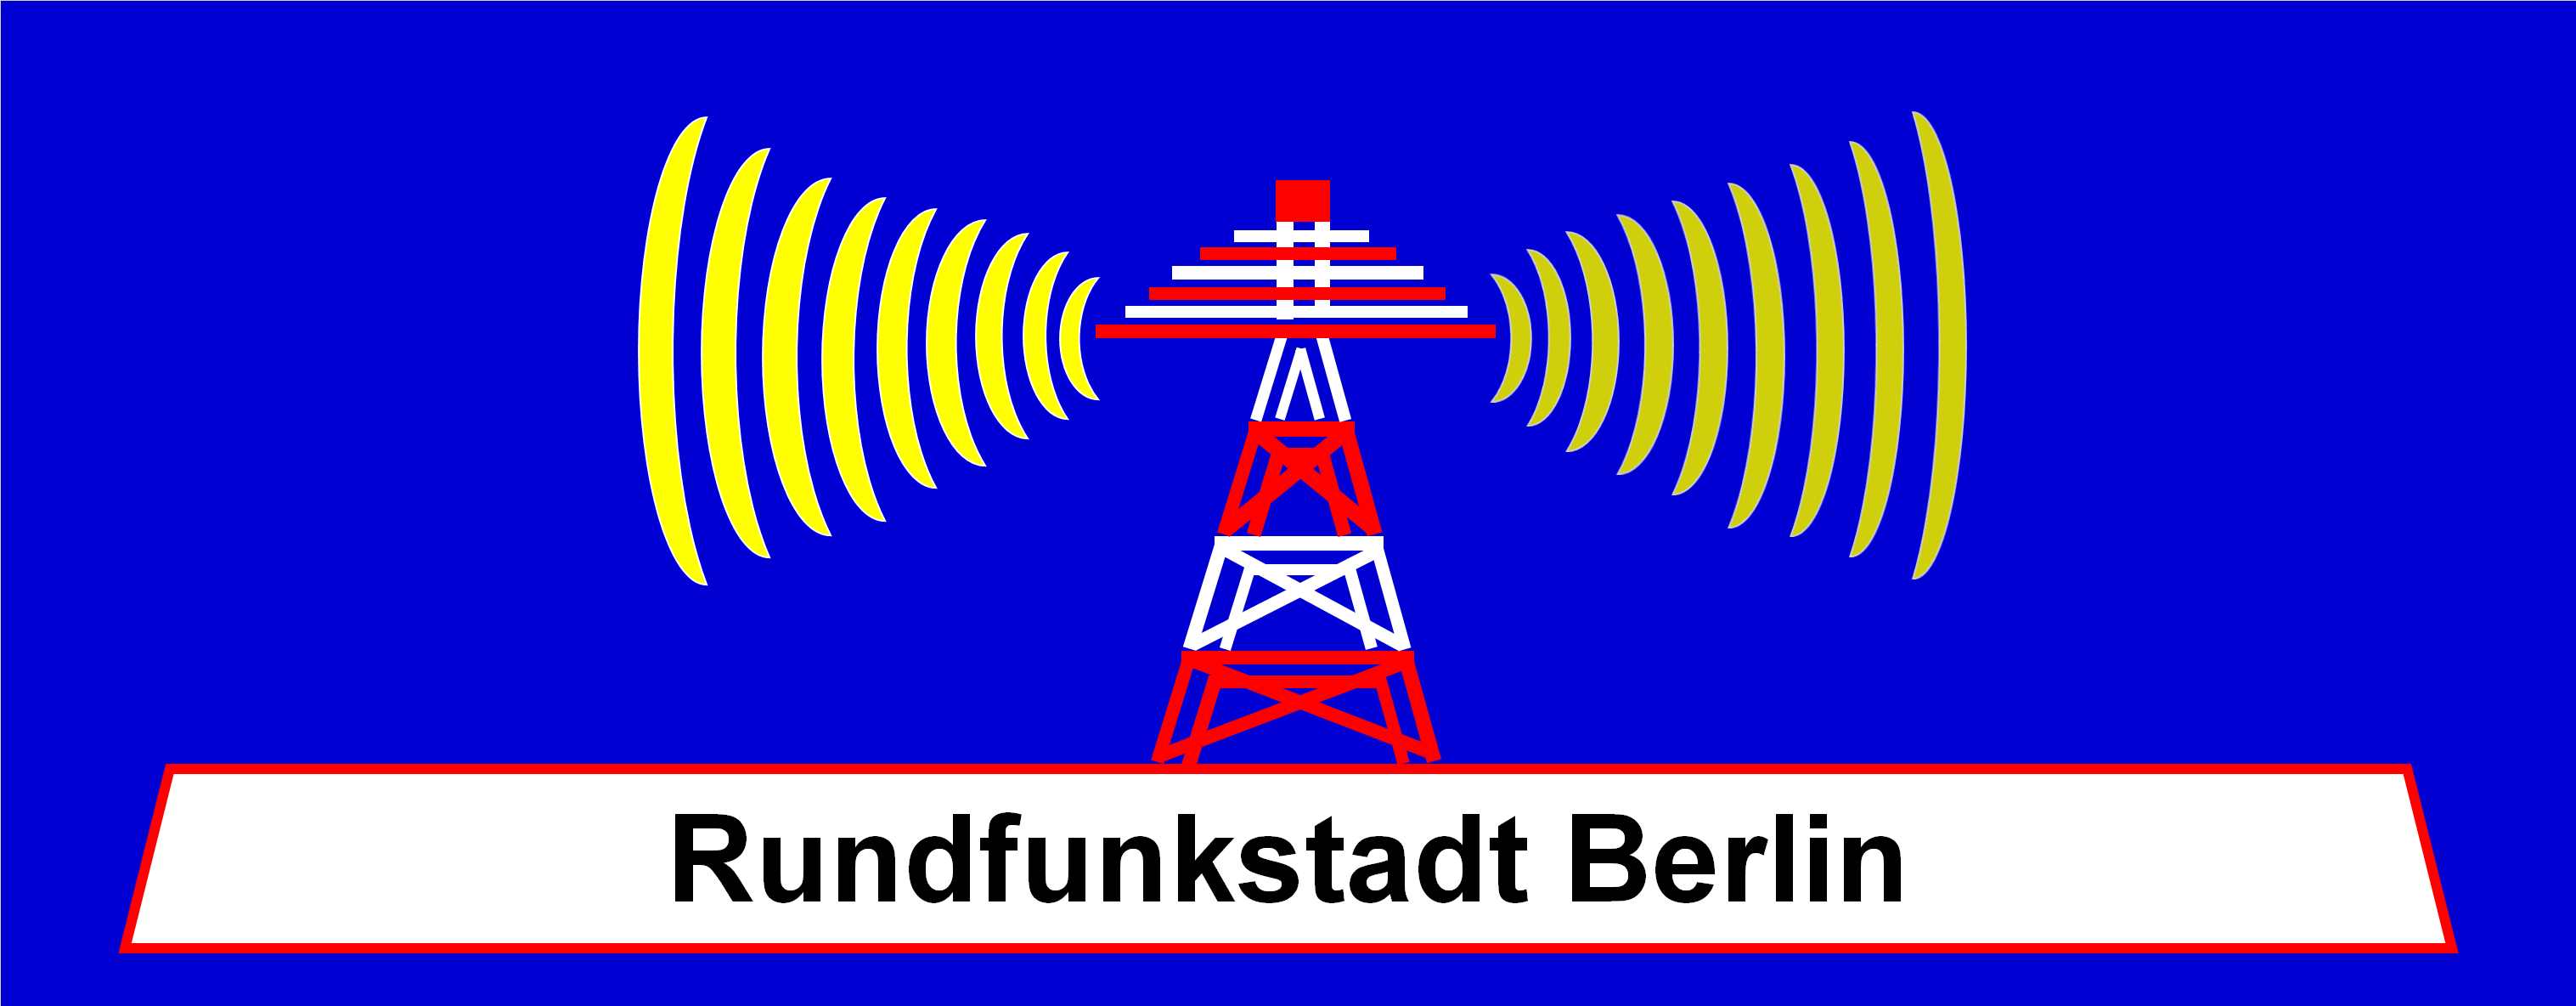 Rundfunkstadt Berlin